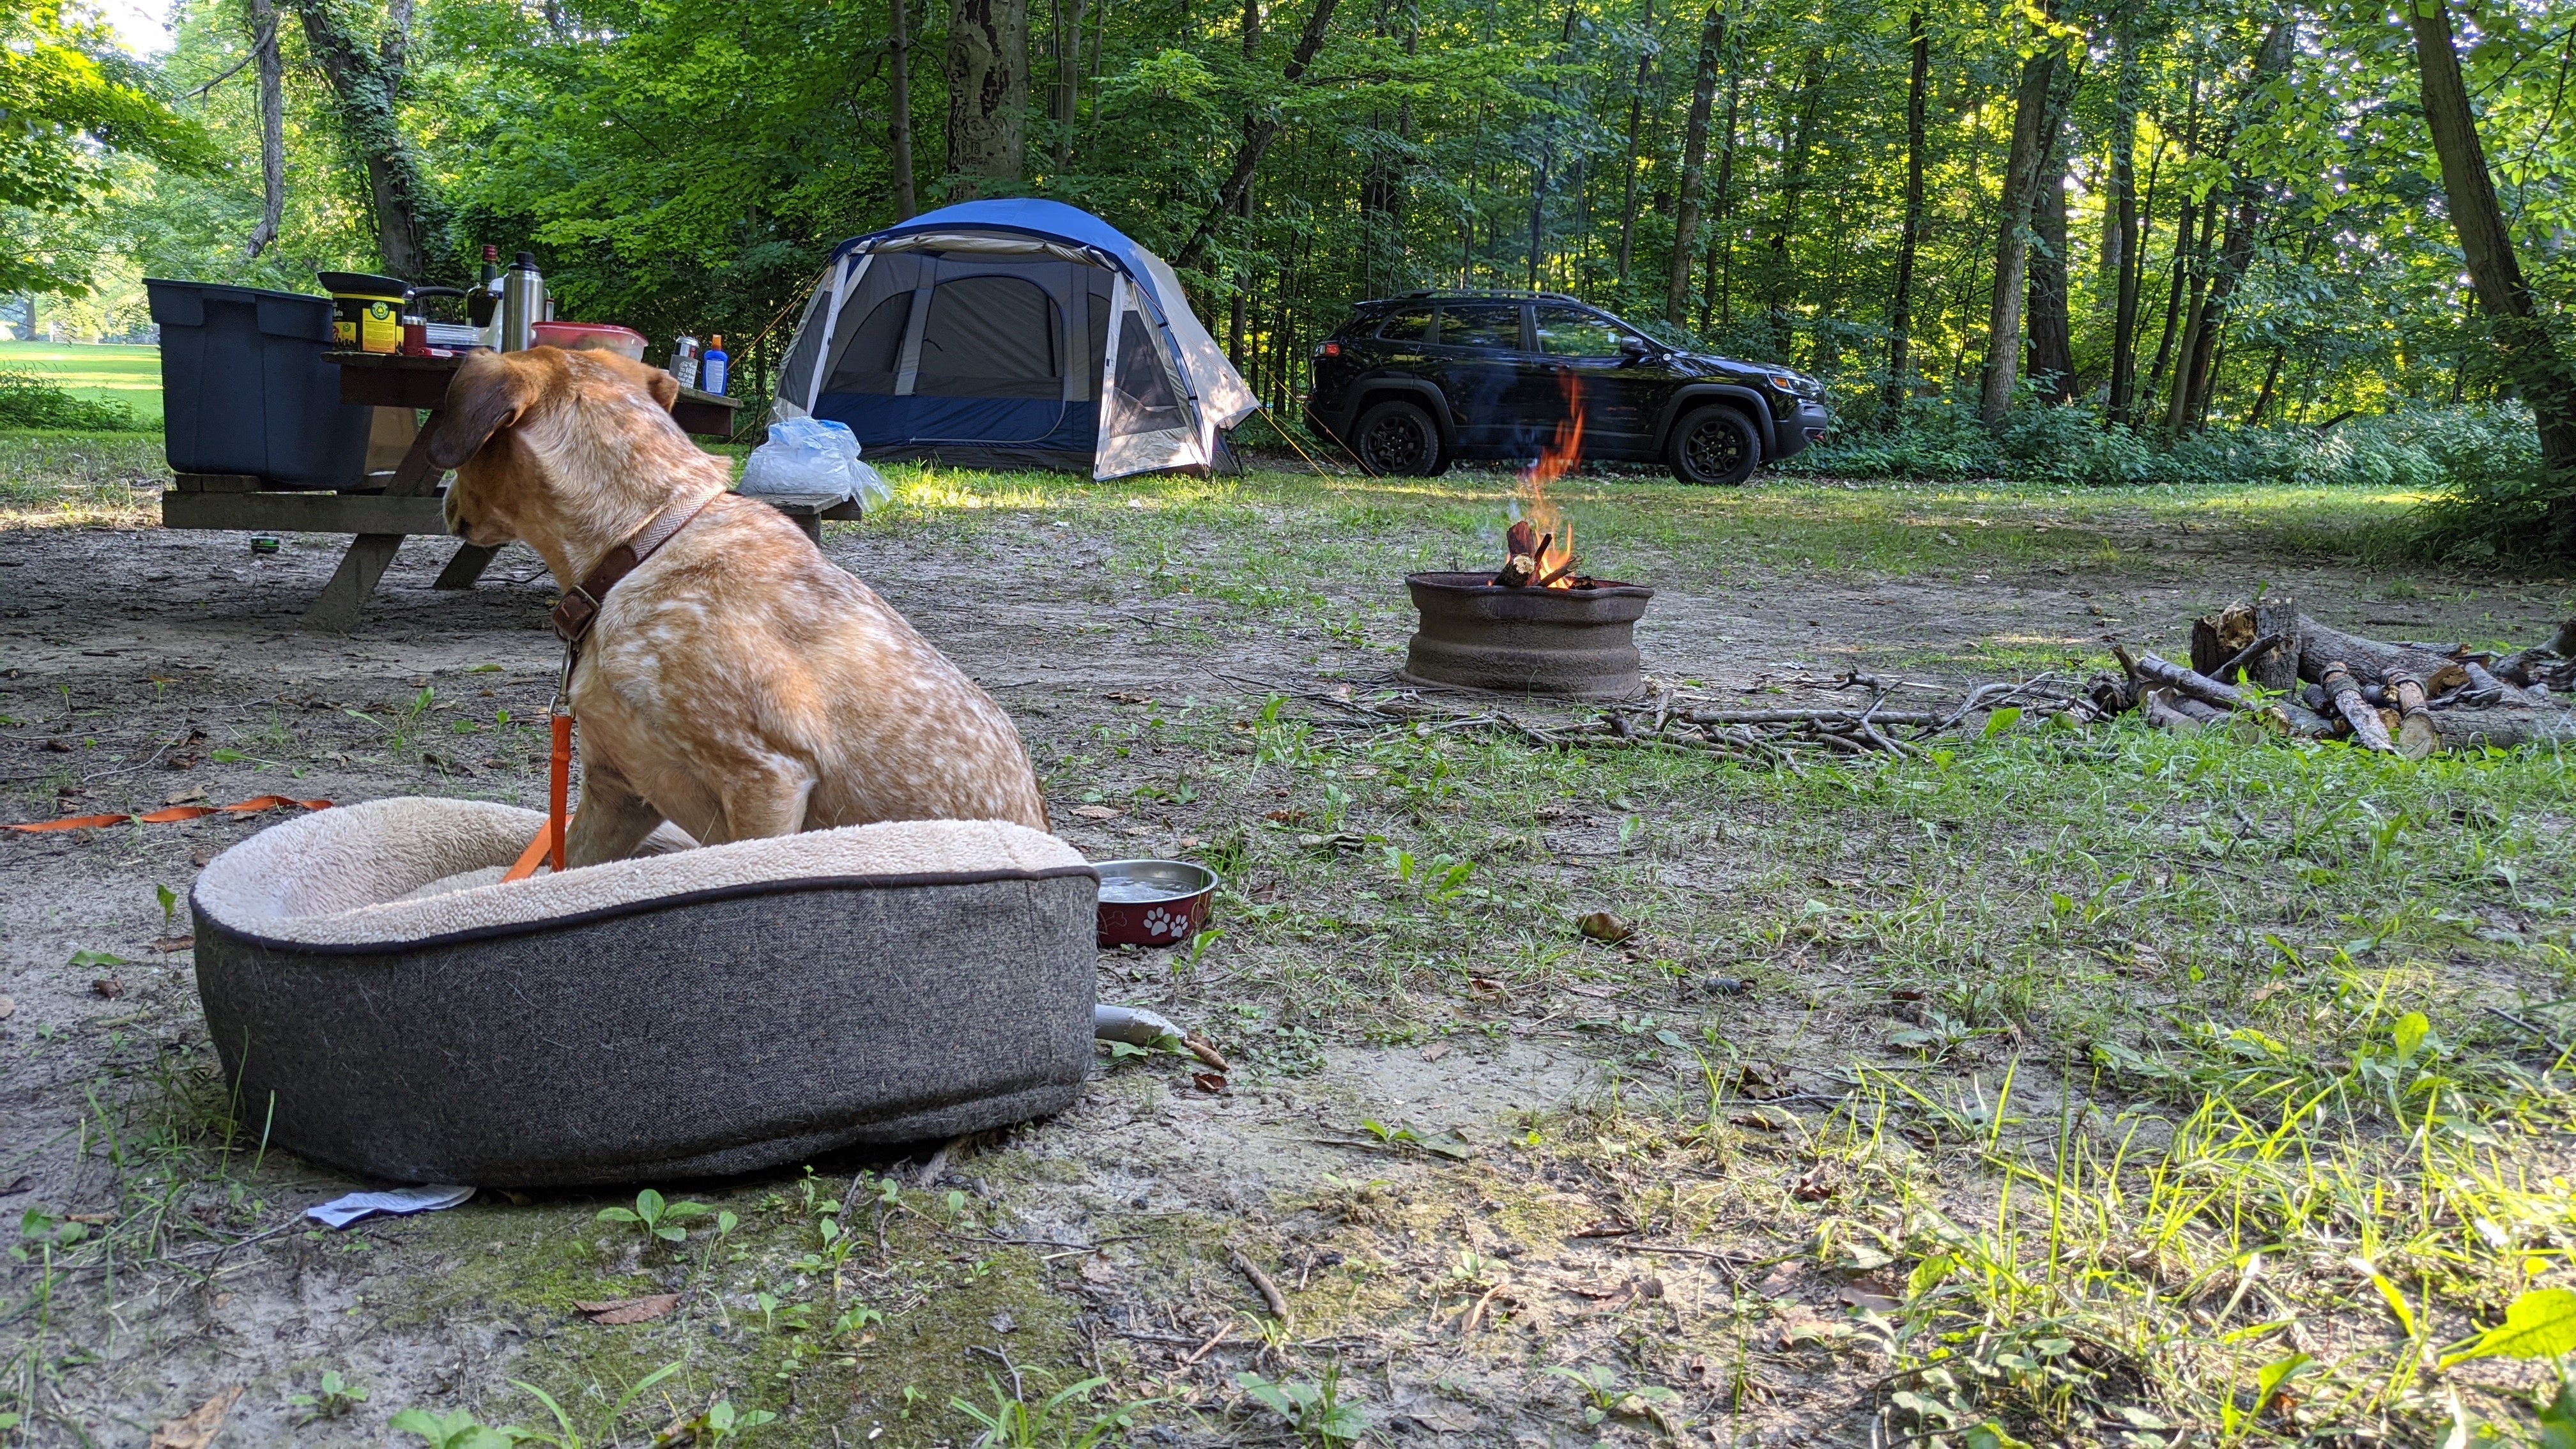 Doggo loving the campsite